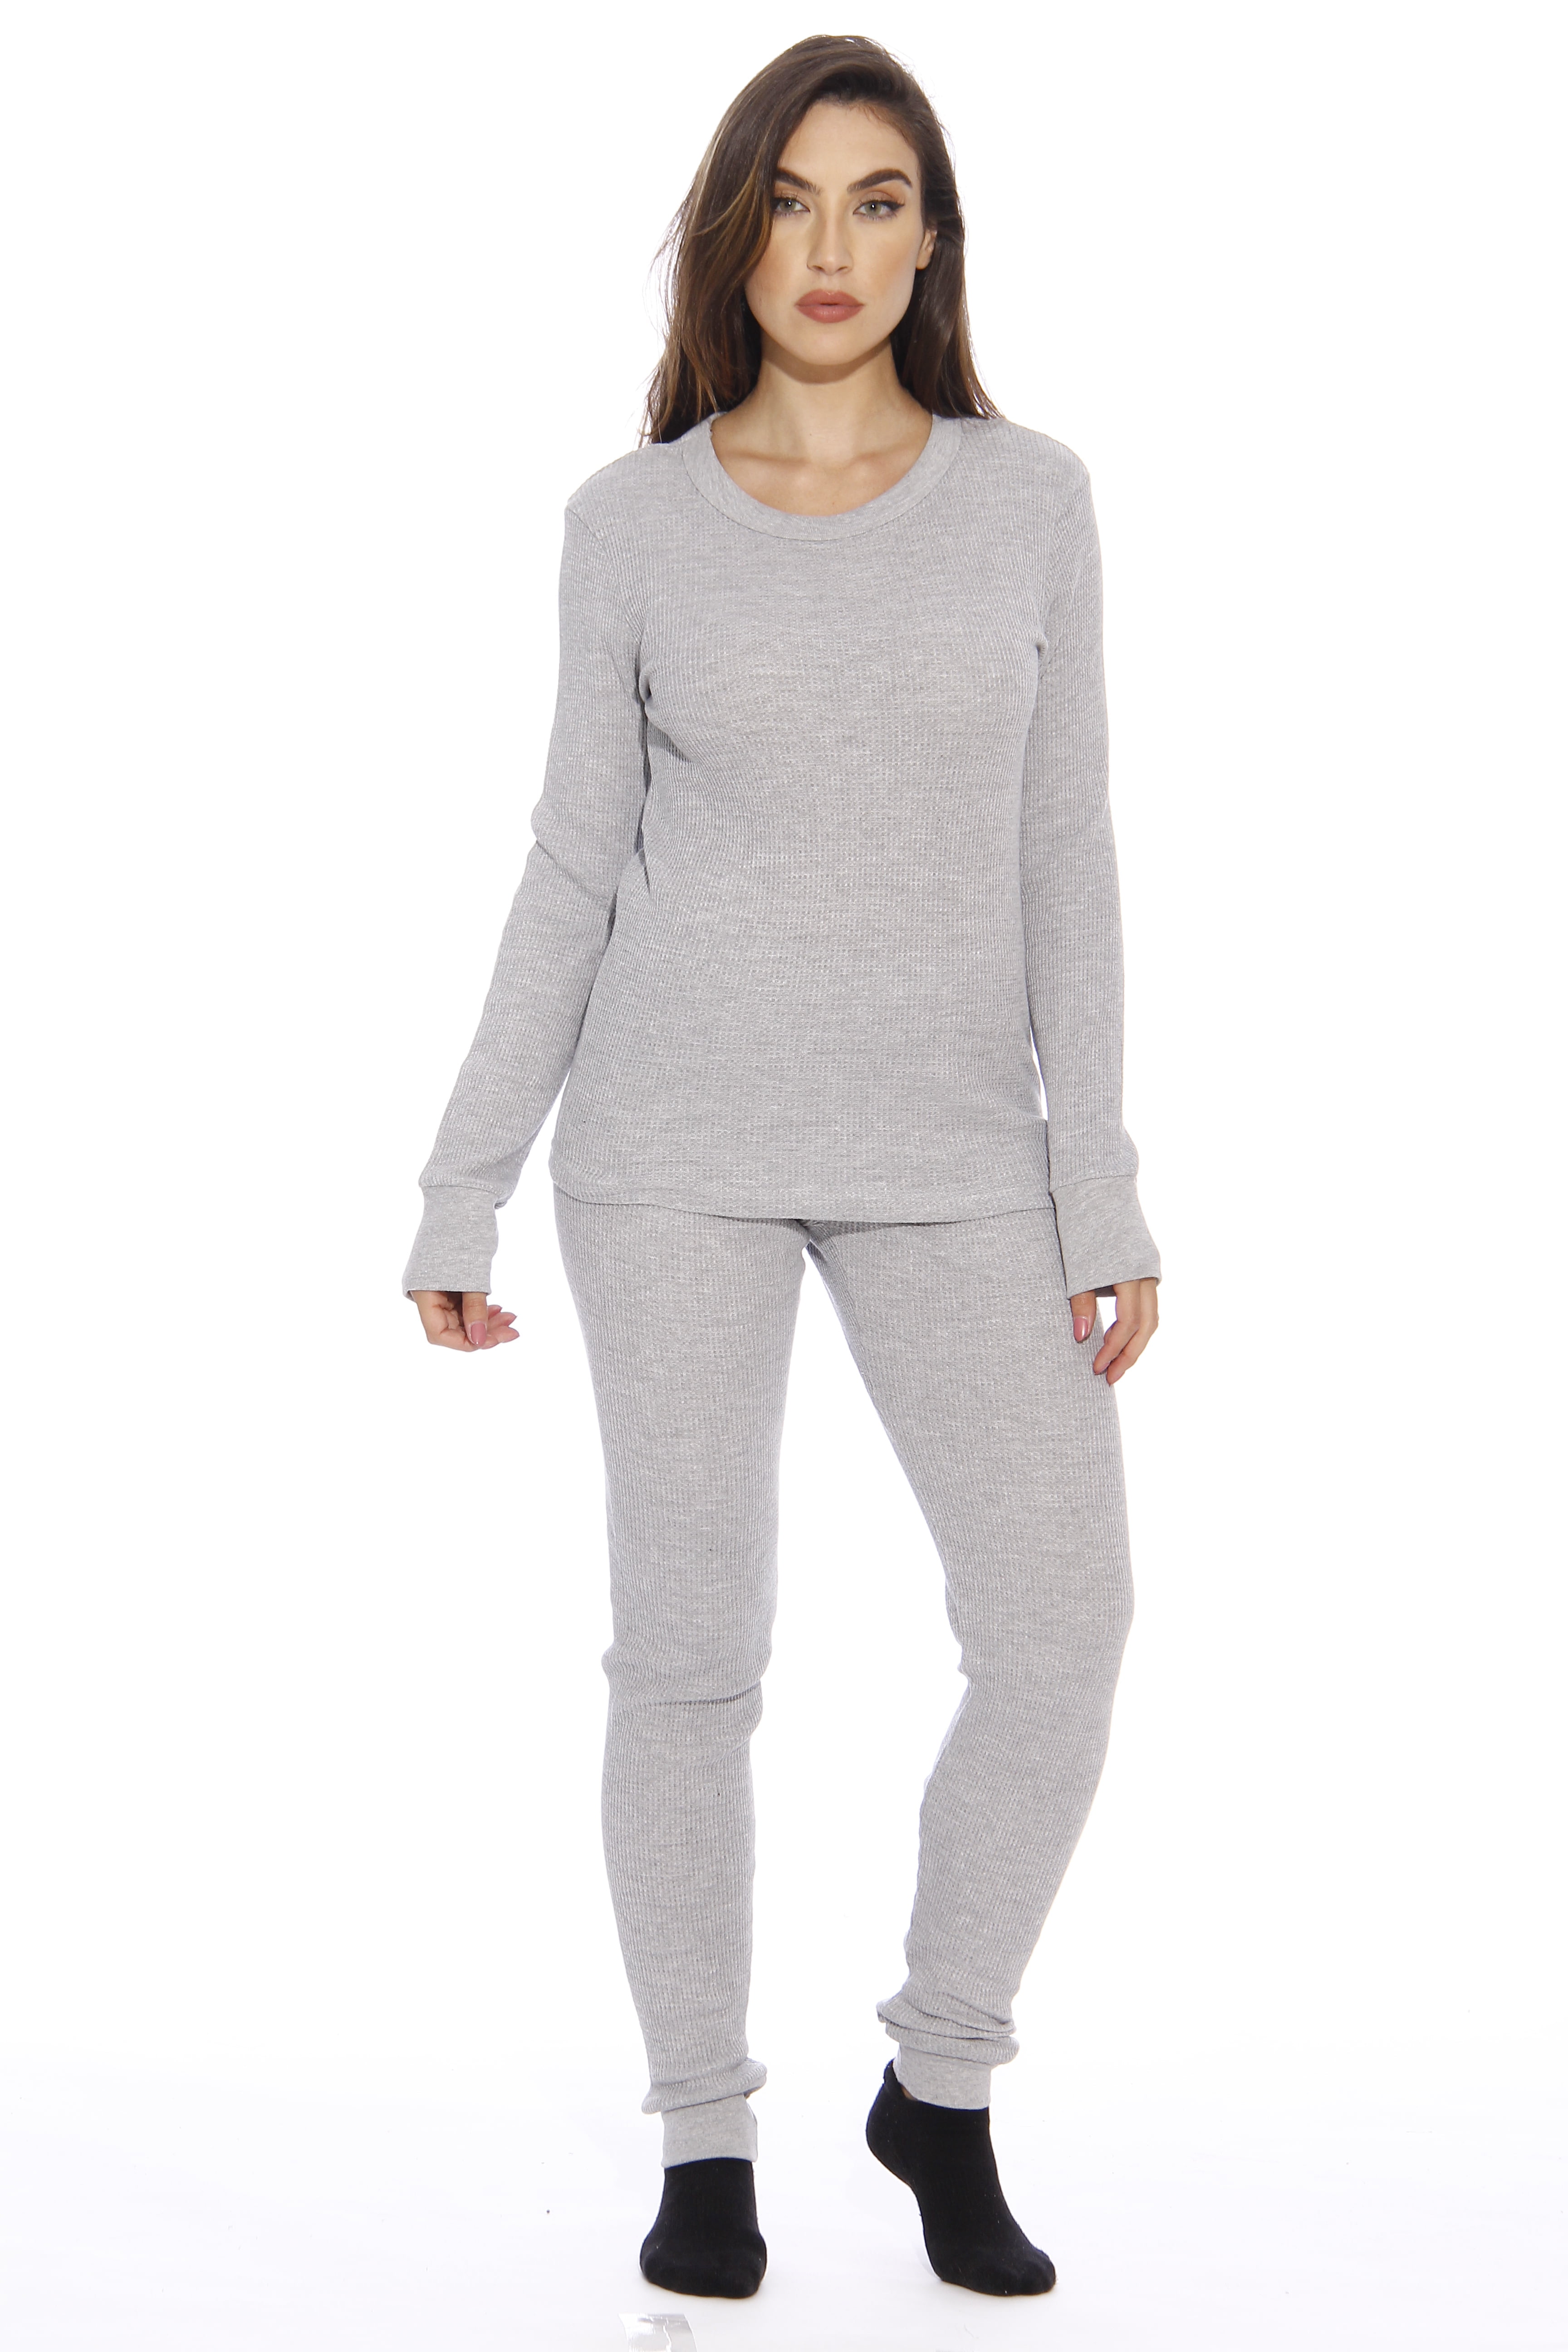 Just Love Women's Thermal Underwear Pajamas Set (Grey, Medium)